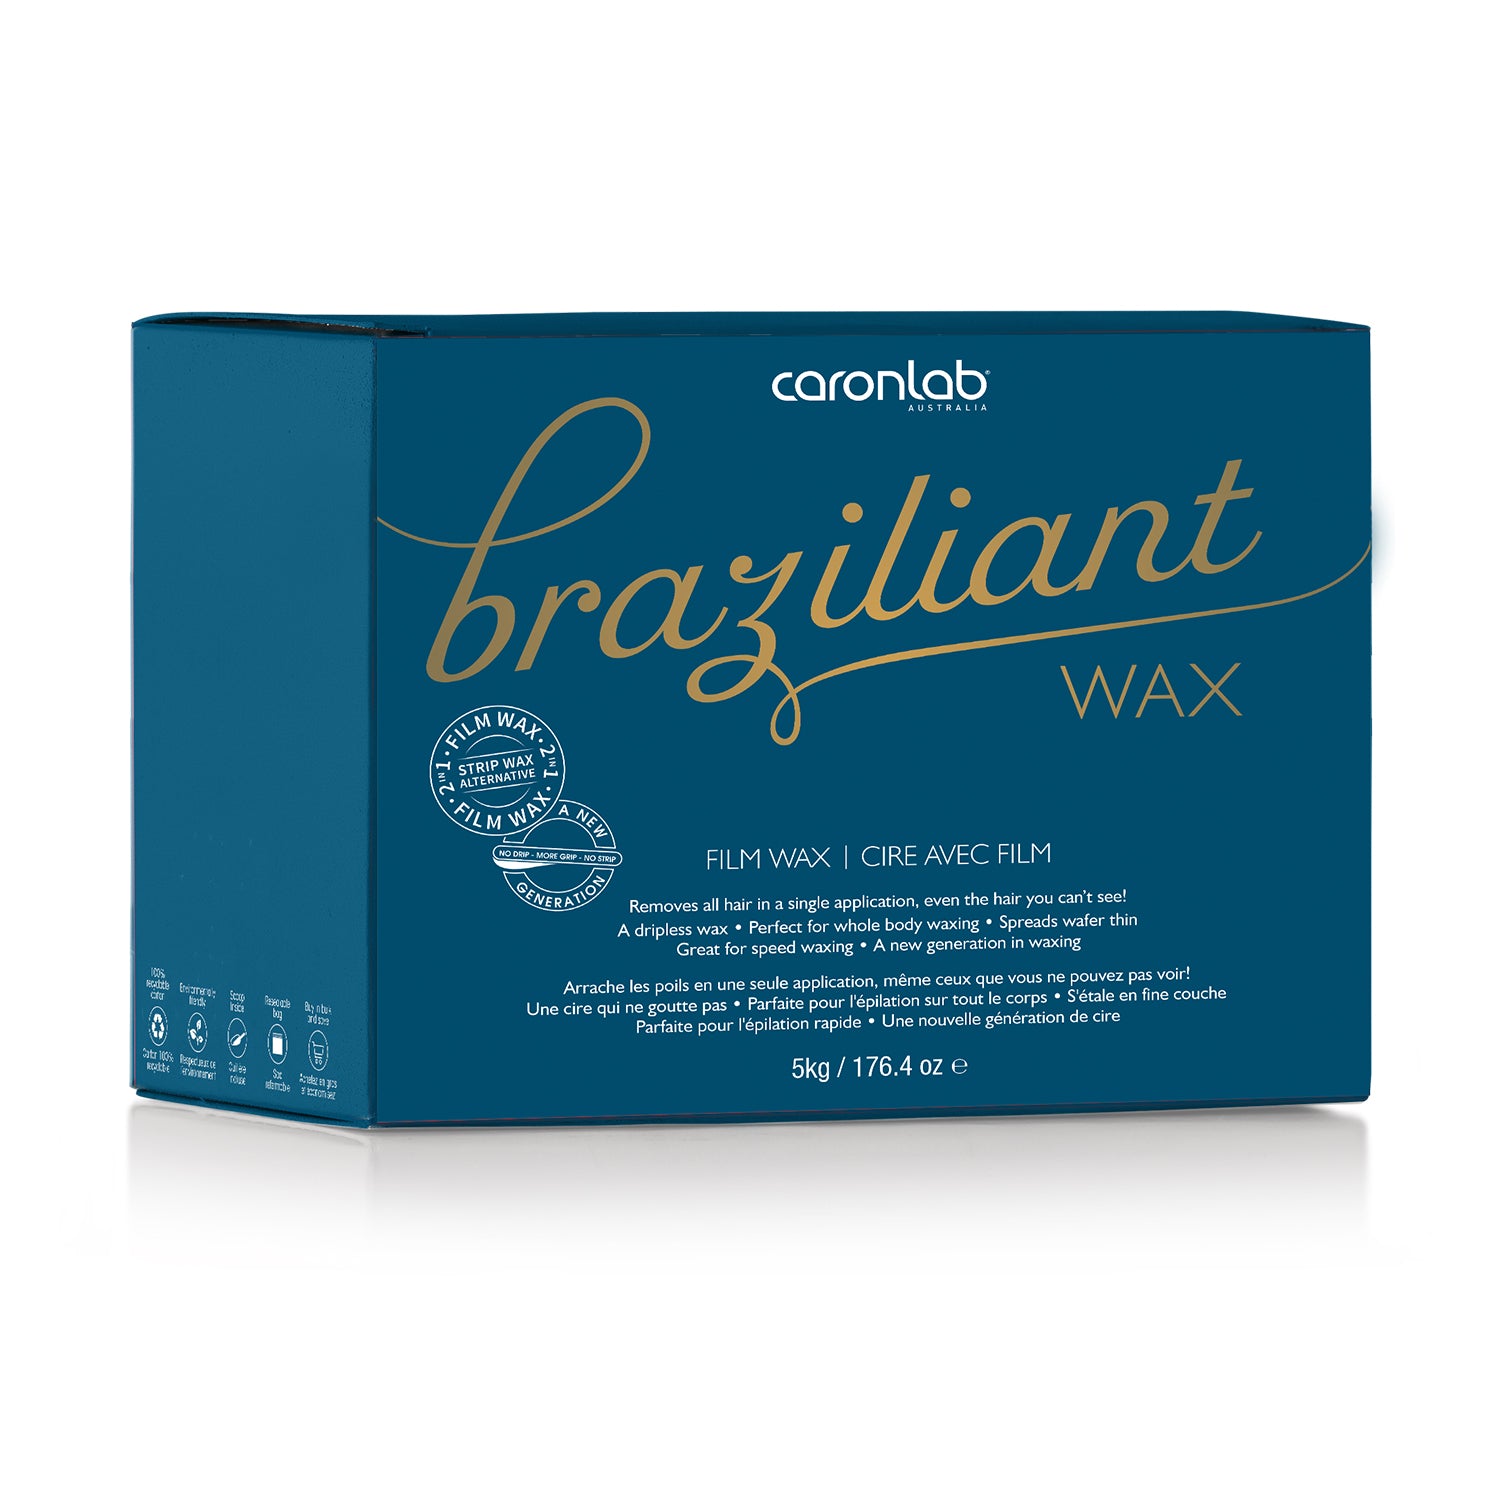 Caronlab - Brazilliant Film Wax Beads - Creata Beauty - Professional Beauty Products